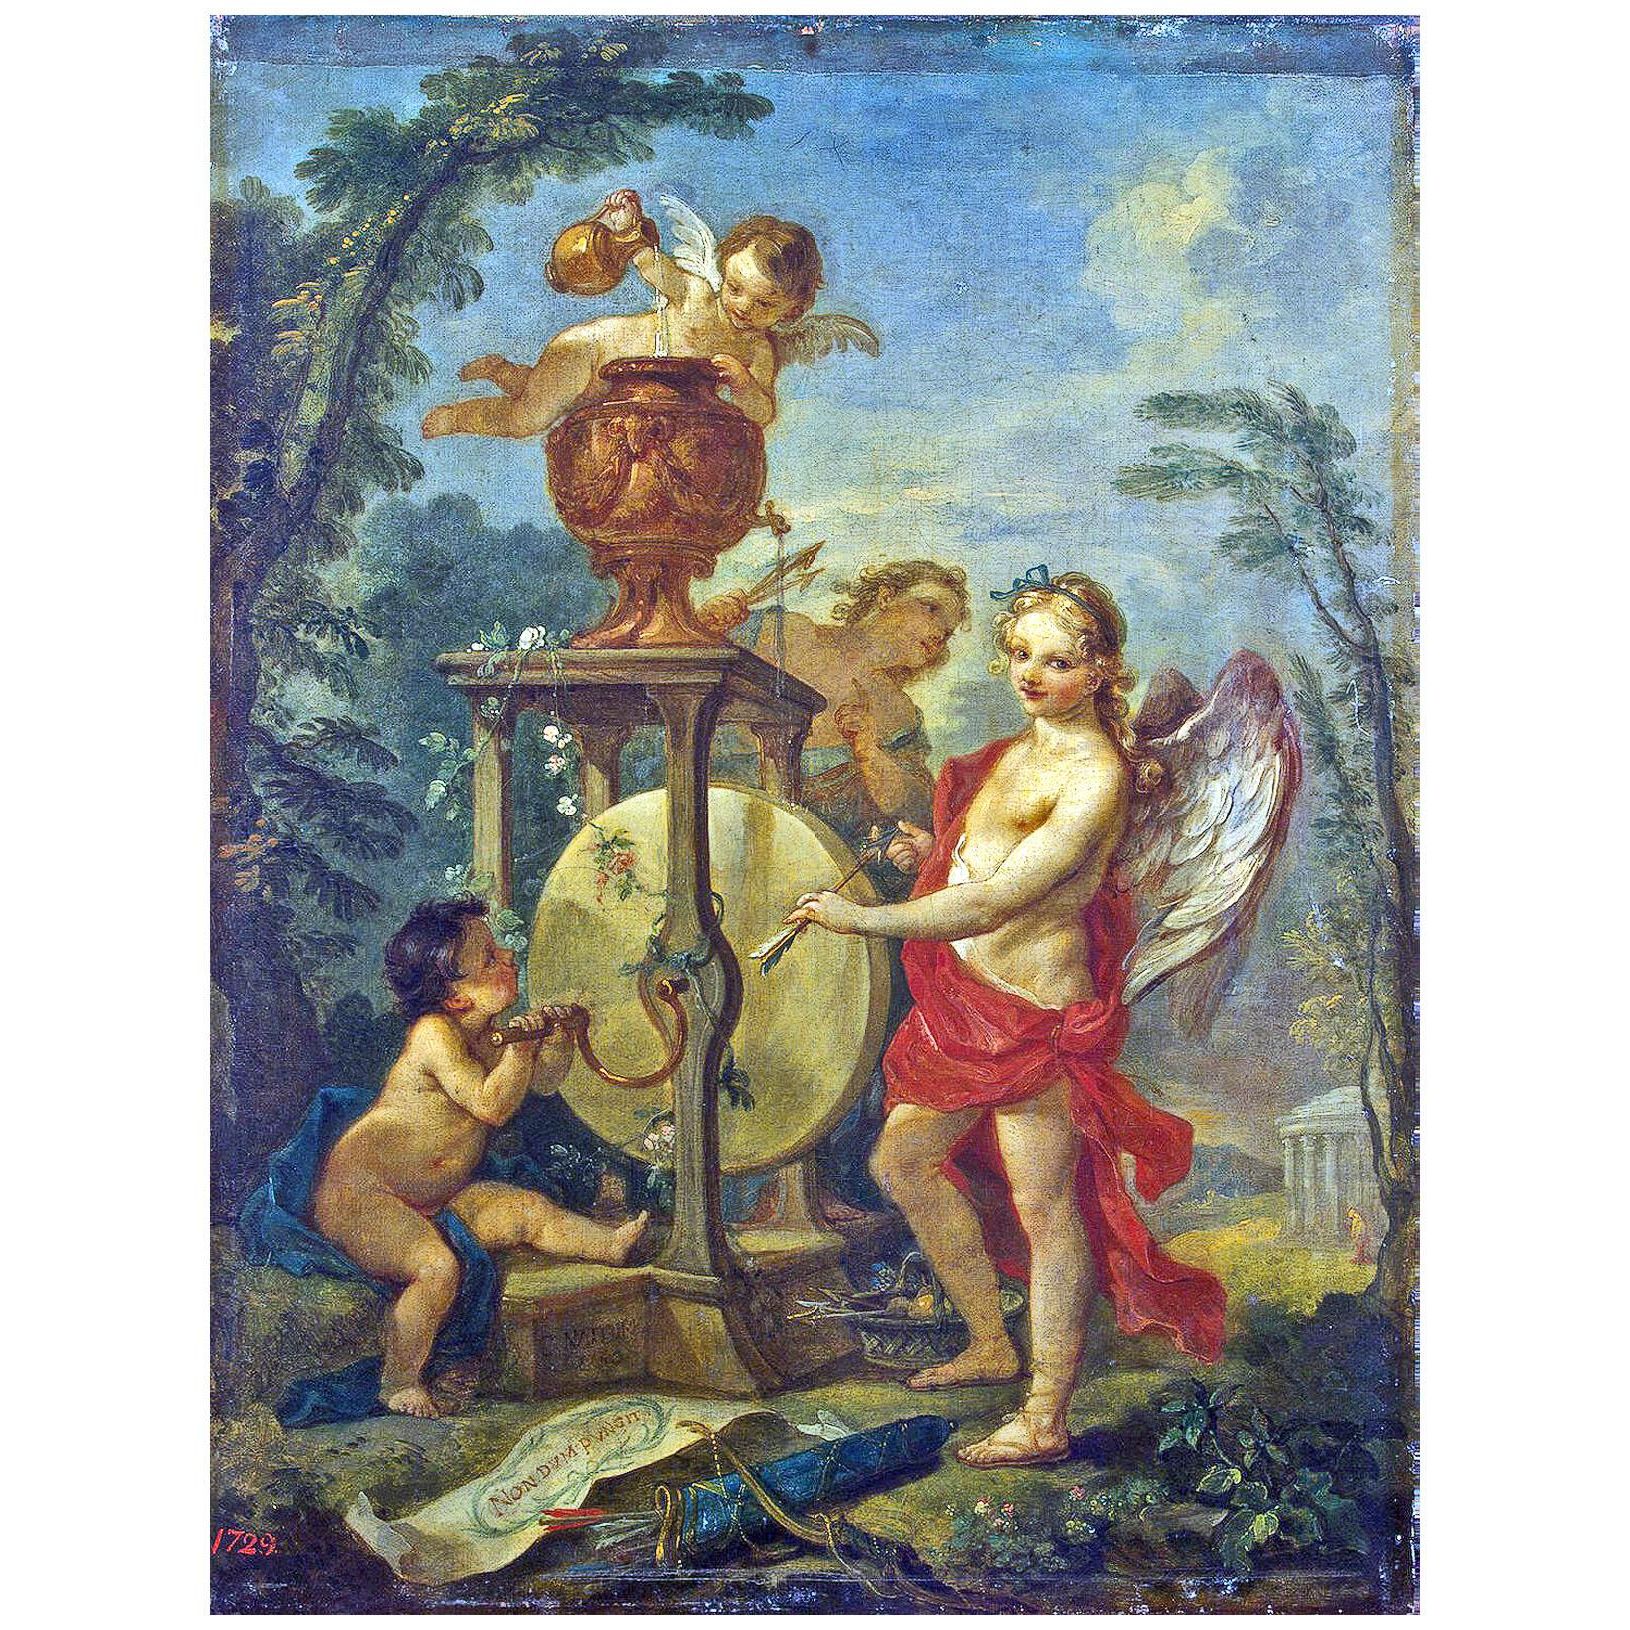 Charles-Joseph Natoire. Cupidon aiguisant une flèche. 1750. Hermitage